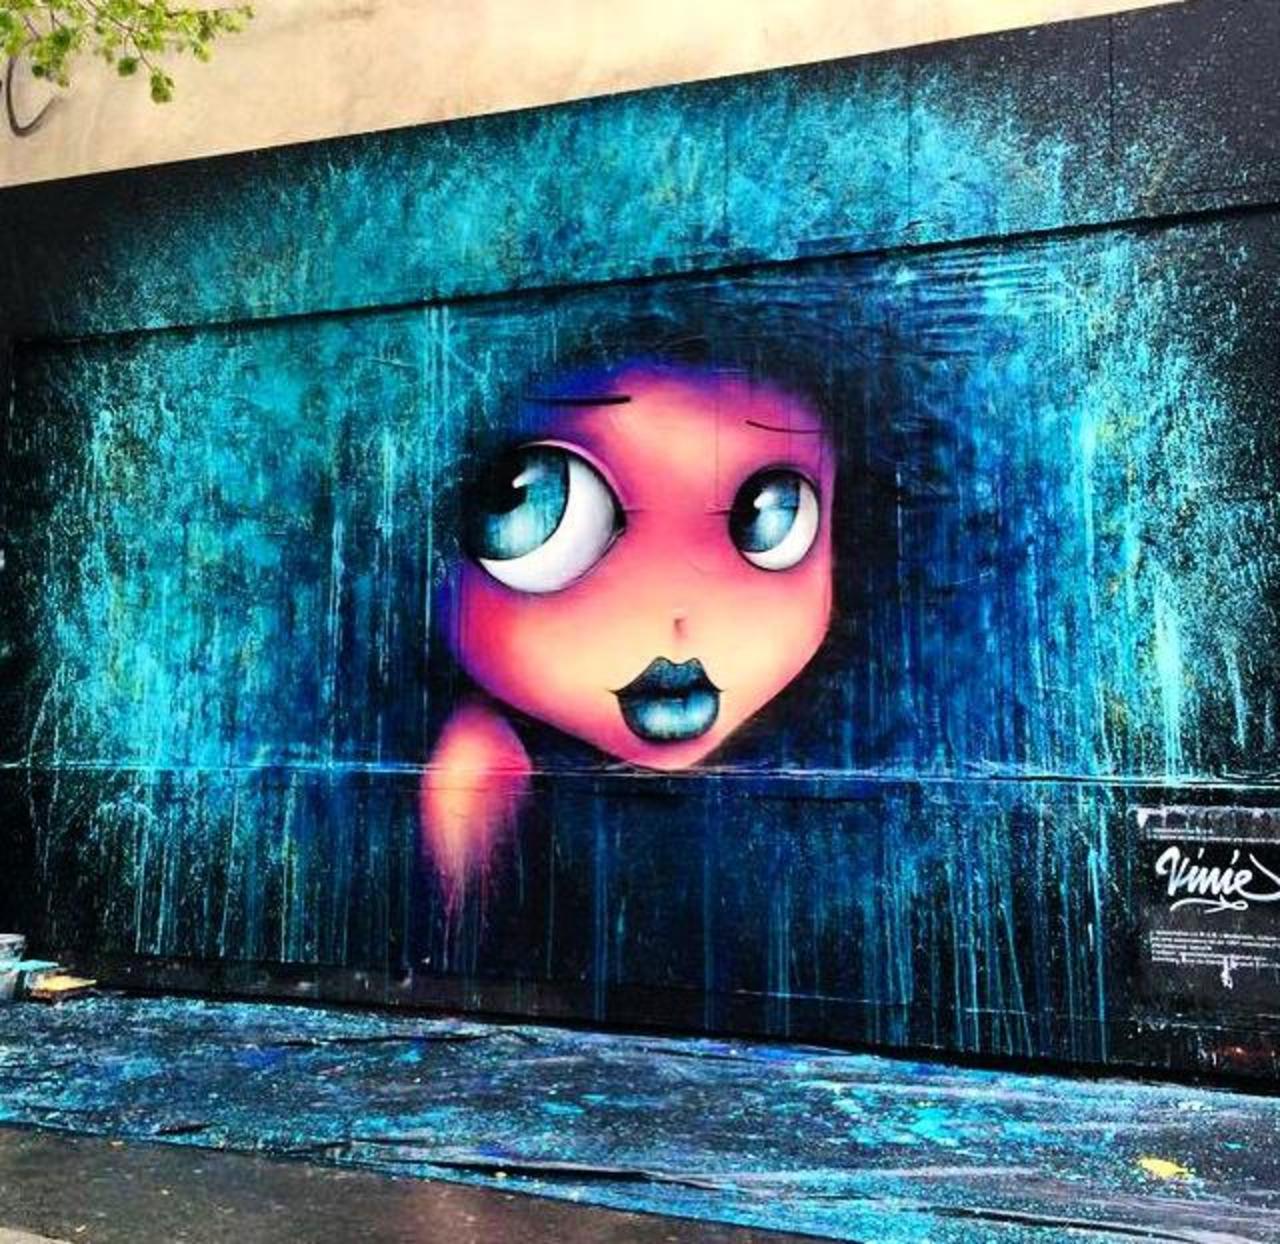 New Street Art by VinieGraffiti in Paris

#art #arte #graffiti #streetart http://t.co/9yET56Z7H0